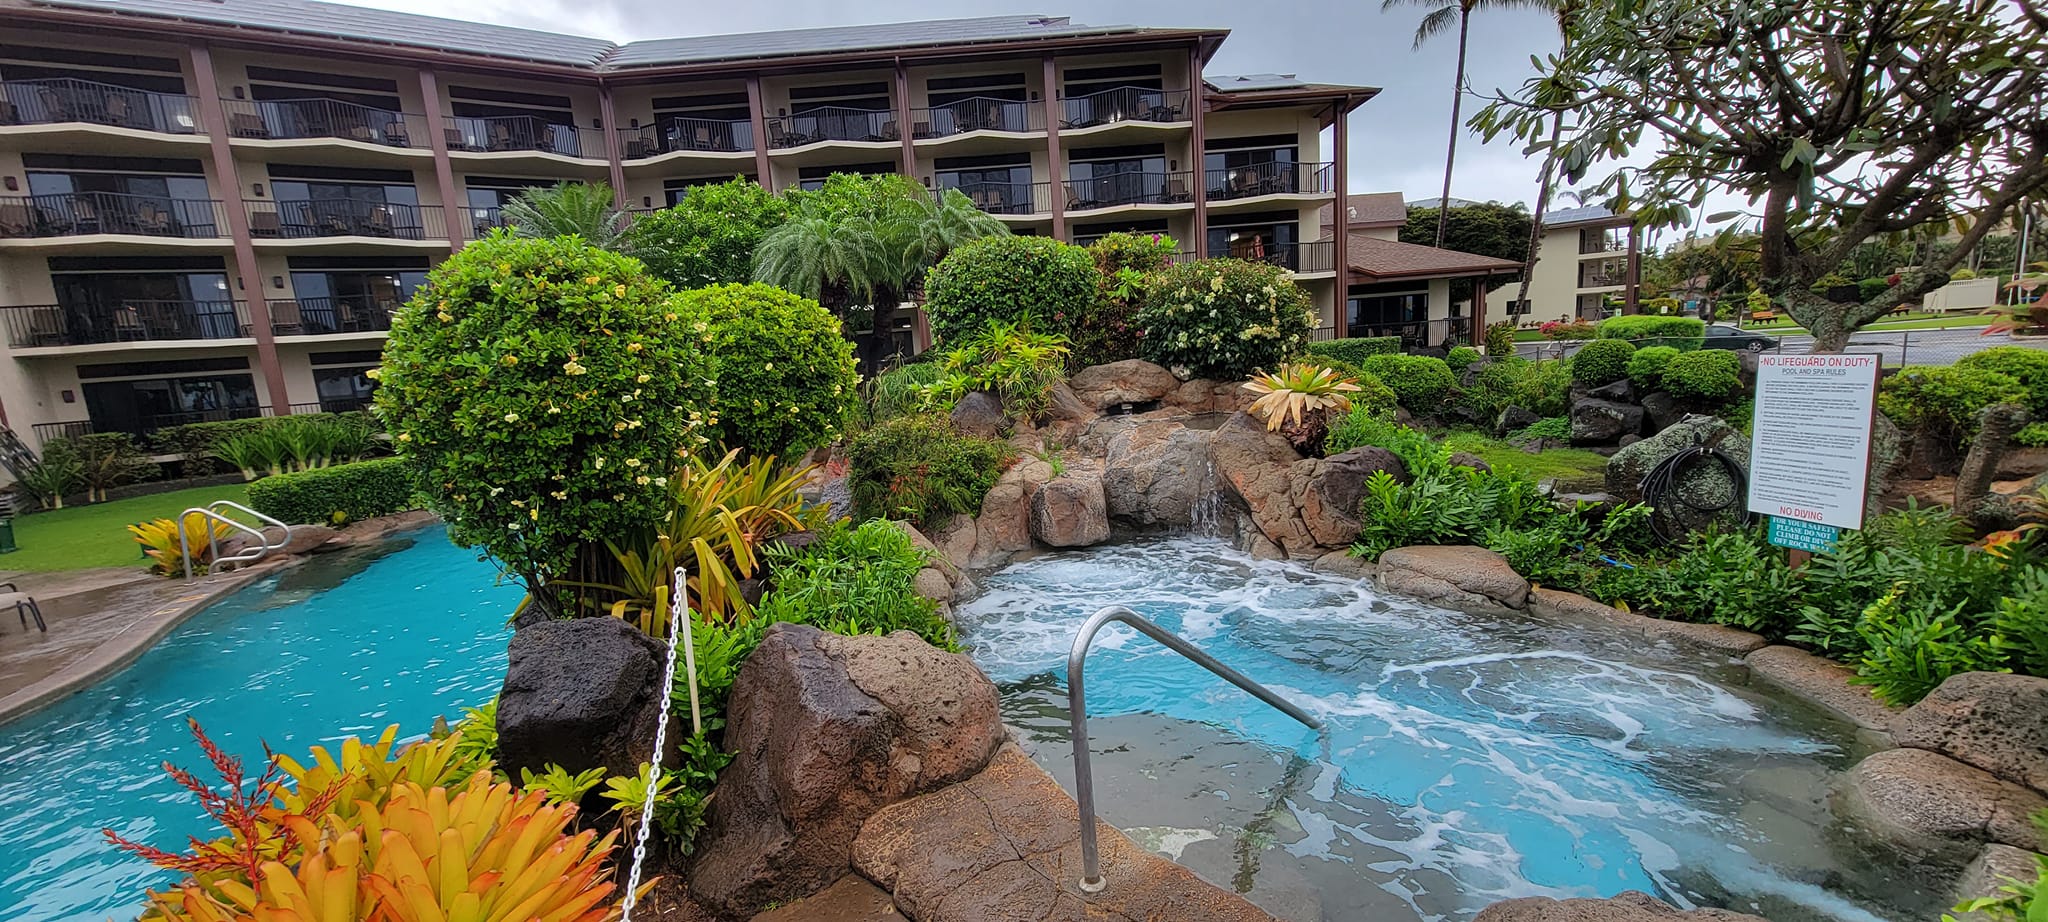 Lawai Beach Resort, Kauai 